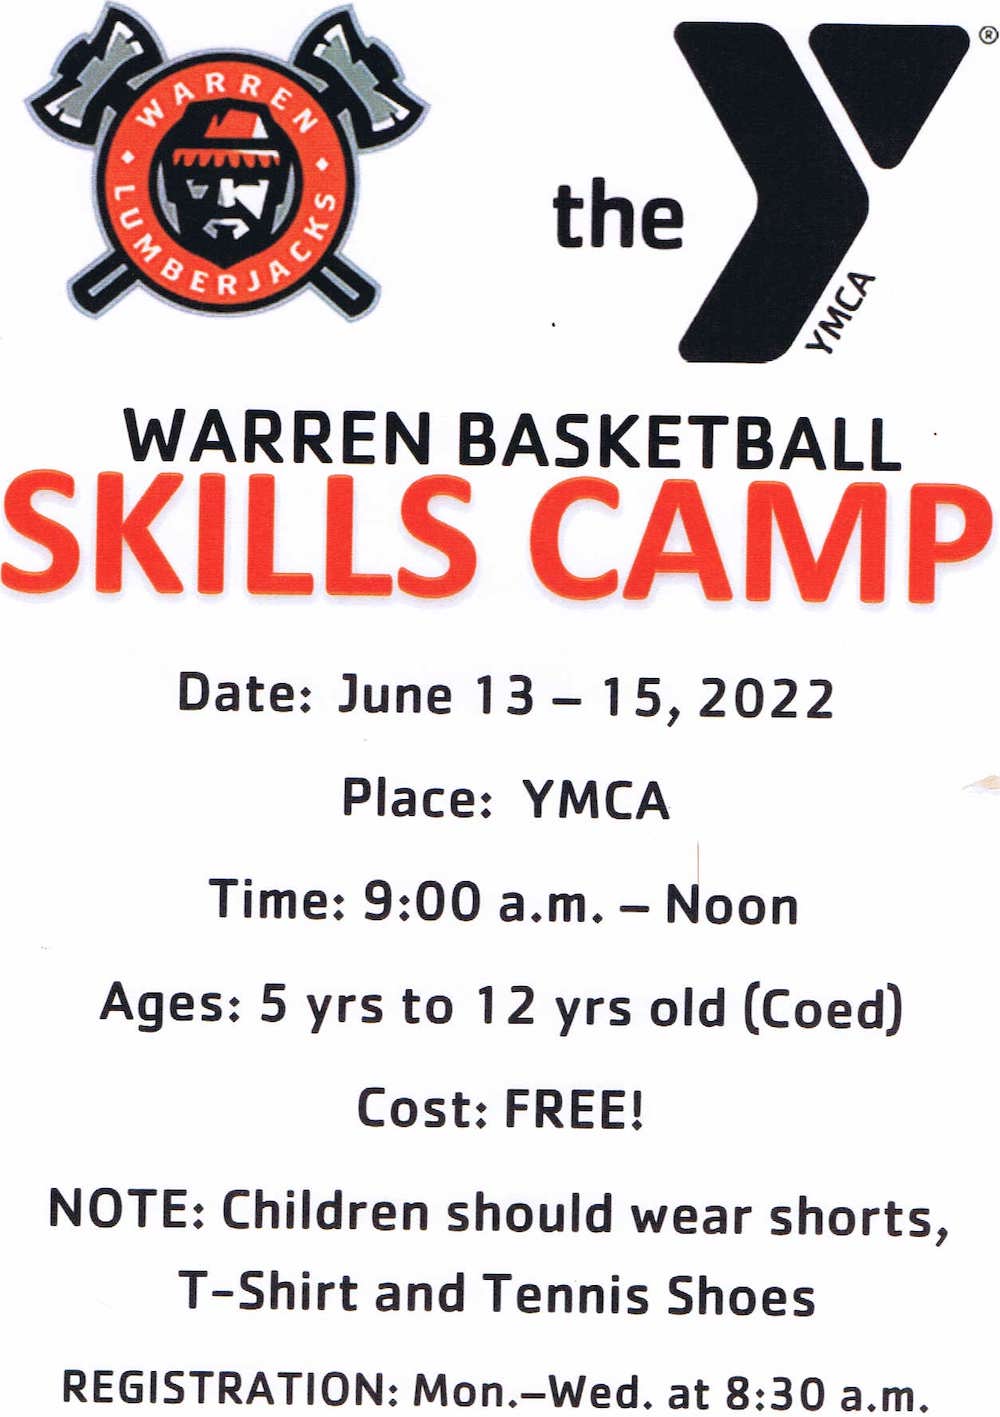 YMCA hosting Lumberjack Basketball Skills Camp June 13-15 for local youth